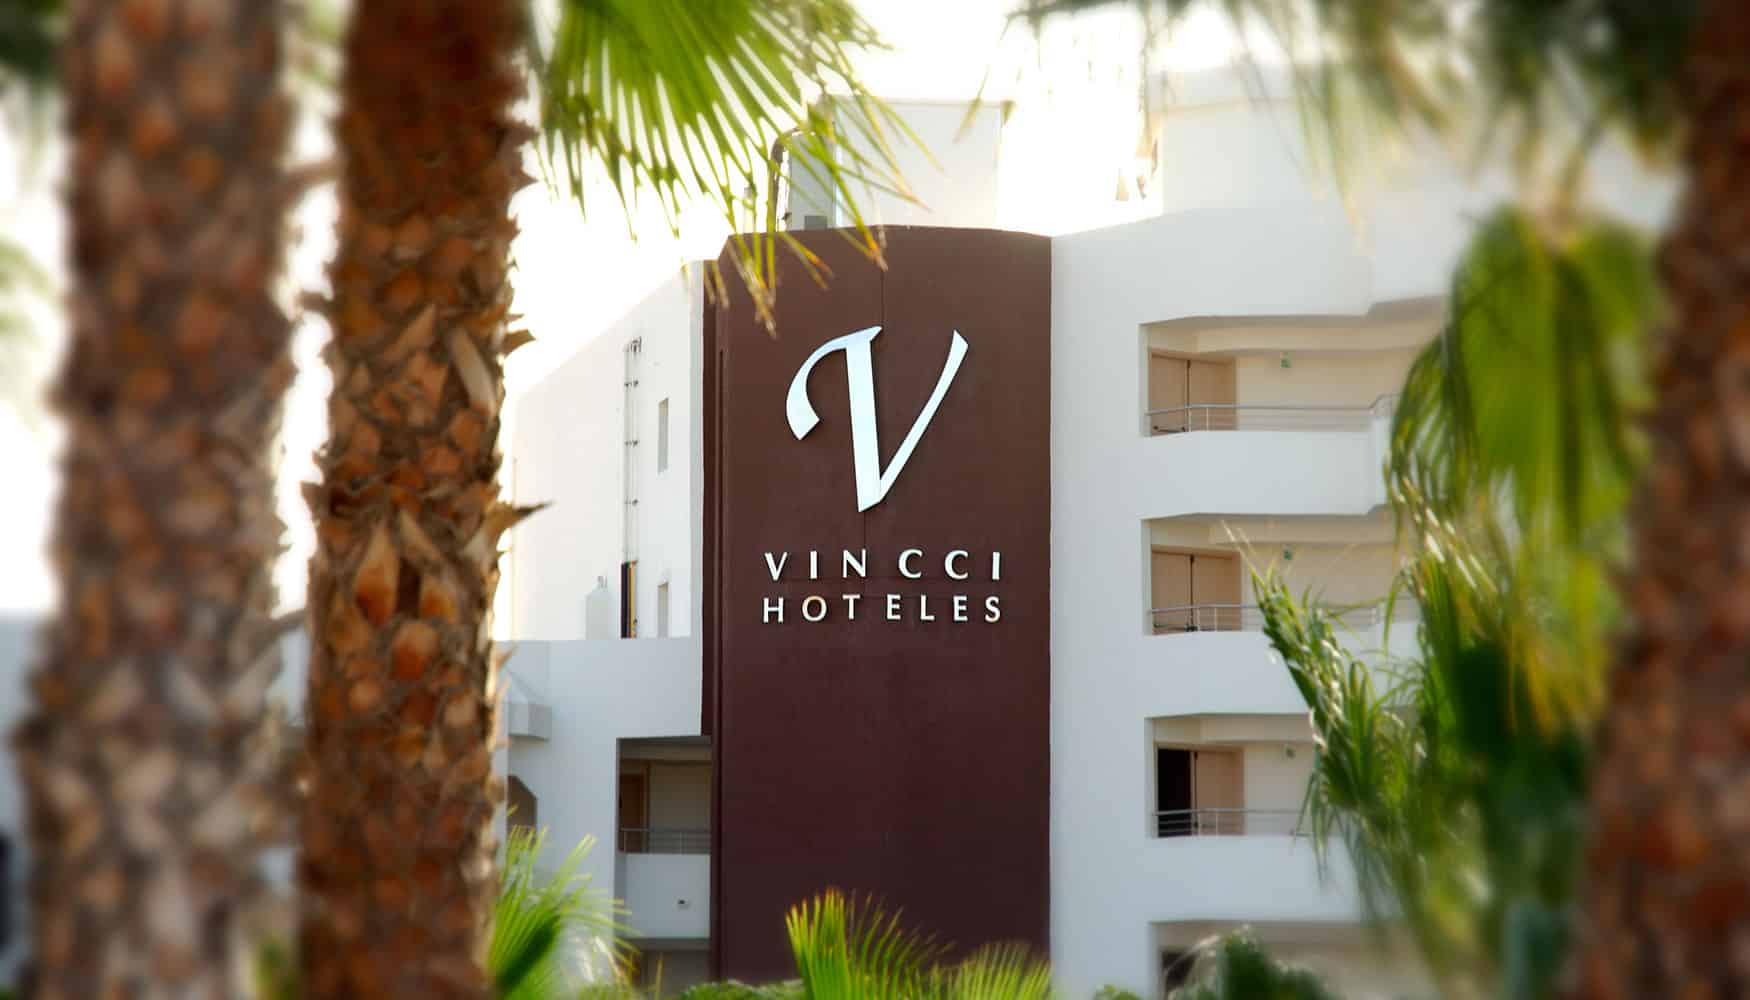 VINCCI HOTELES, S.A.